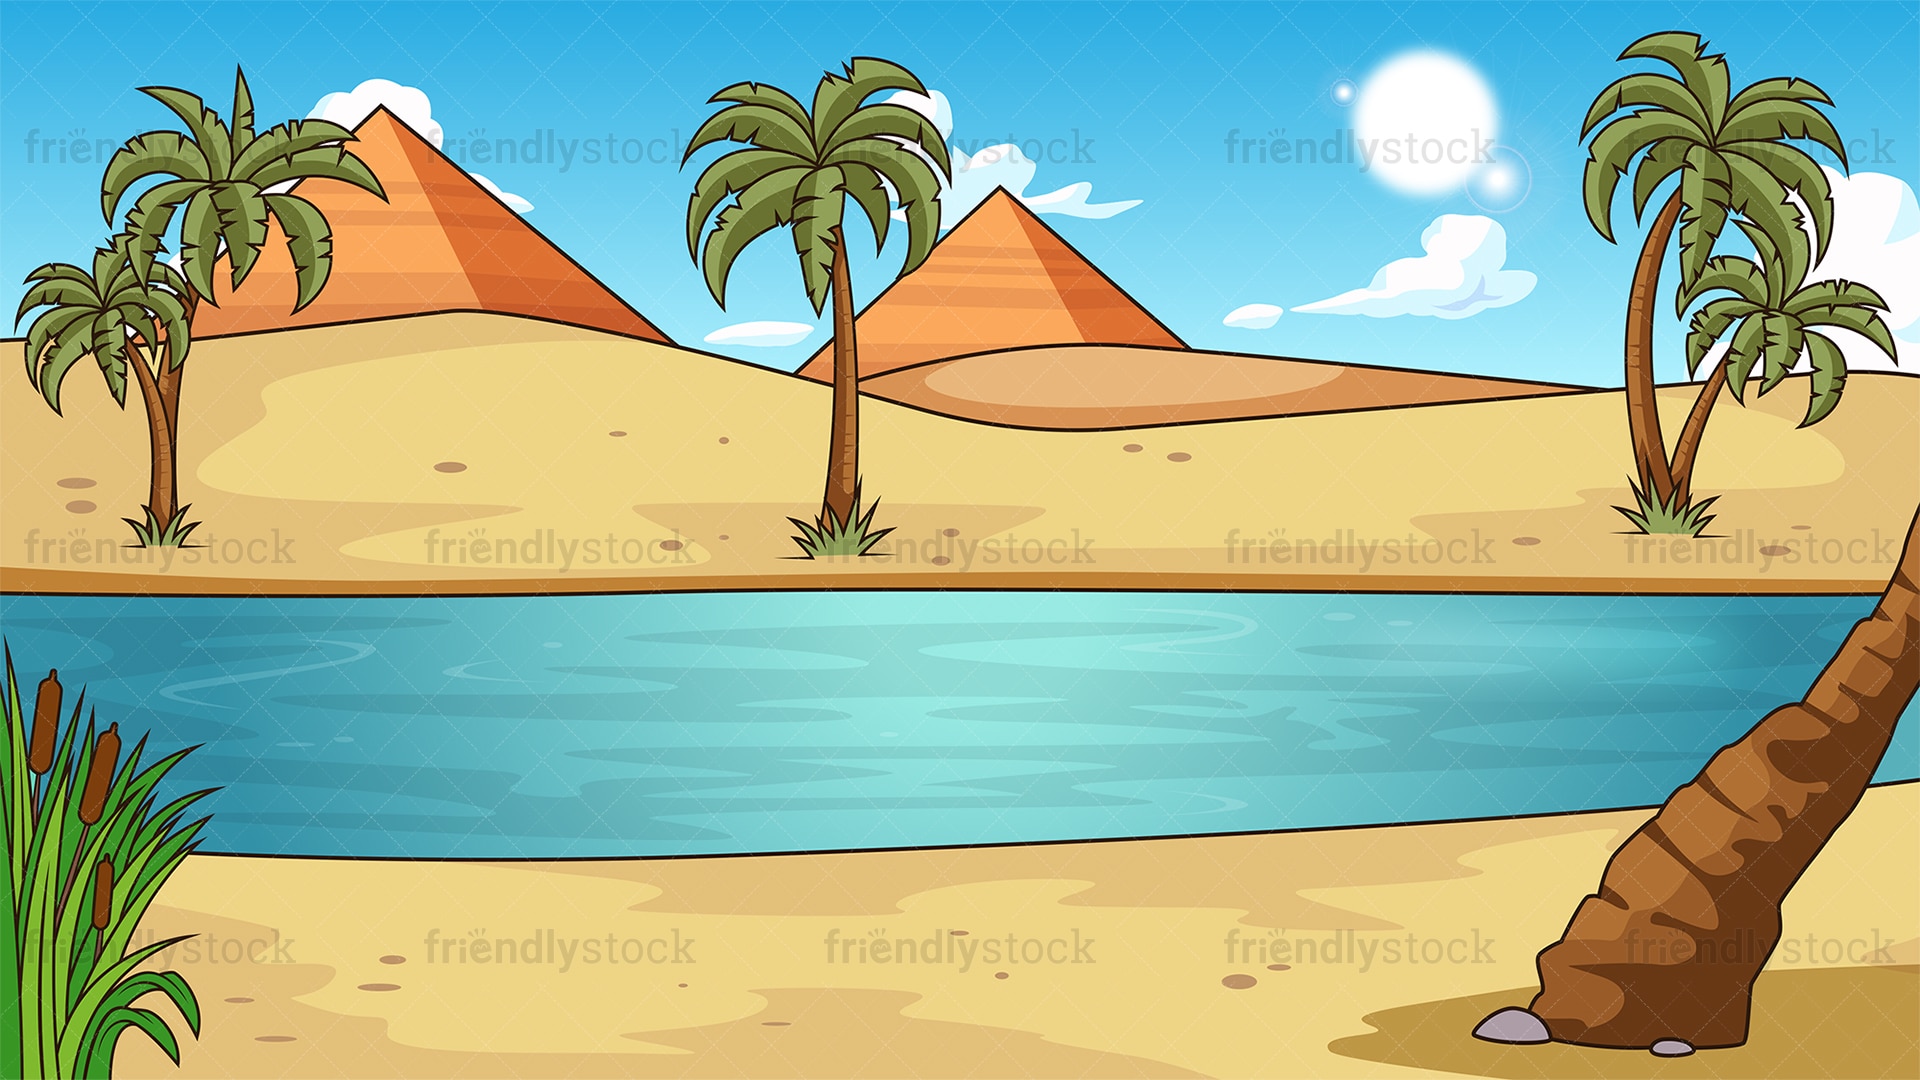 Nile River Background Cartoon Vector Clipart - FriendlyStock